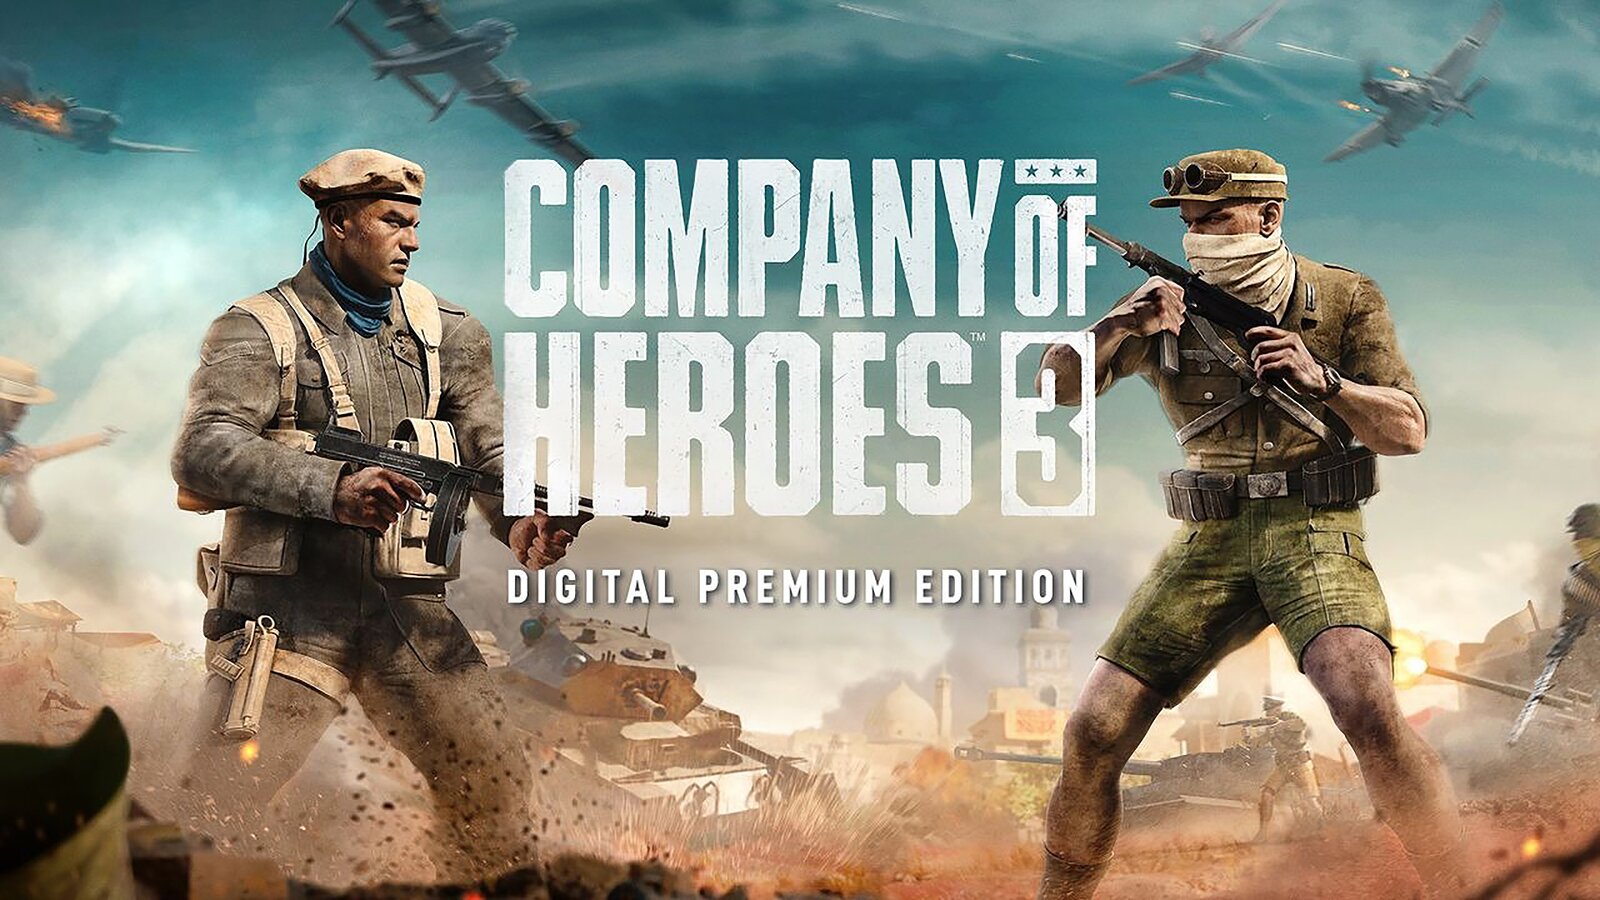 Company of Heroes 3 - Digital Premium Edition